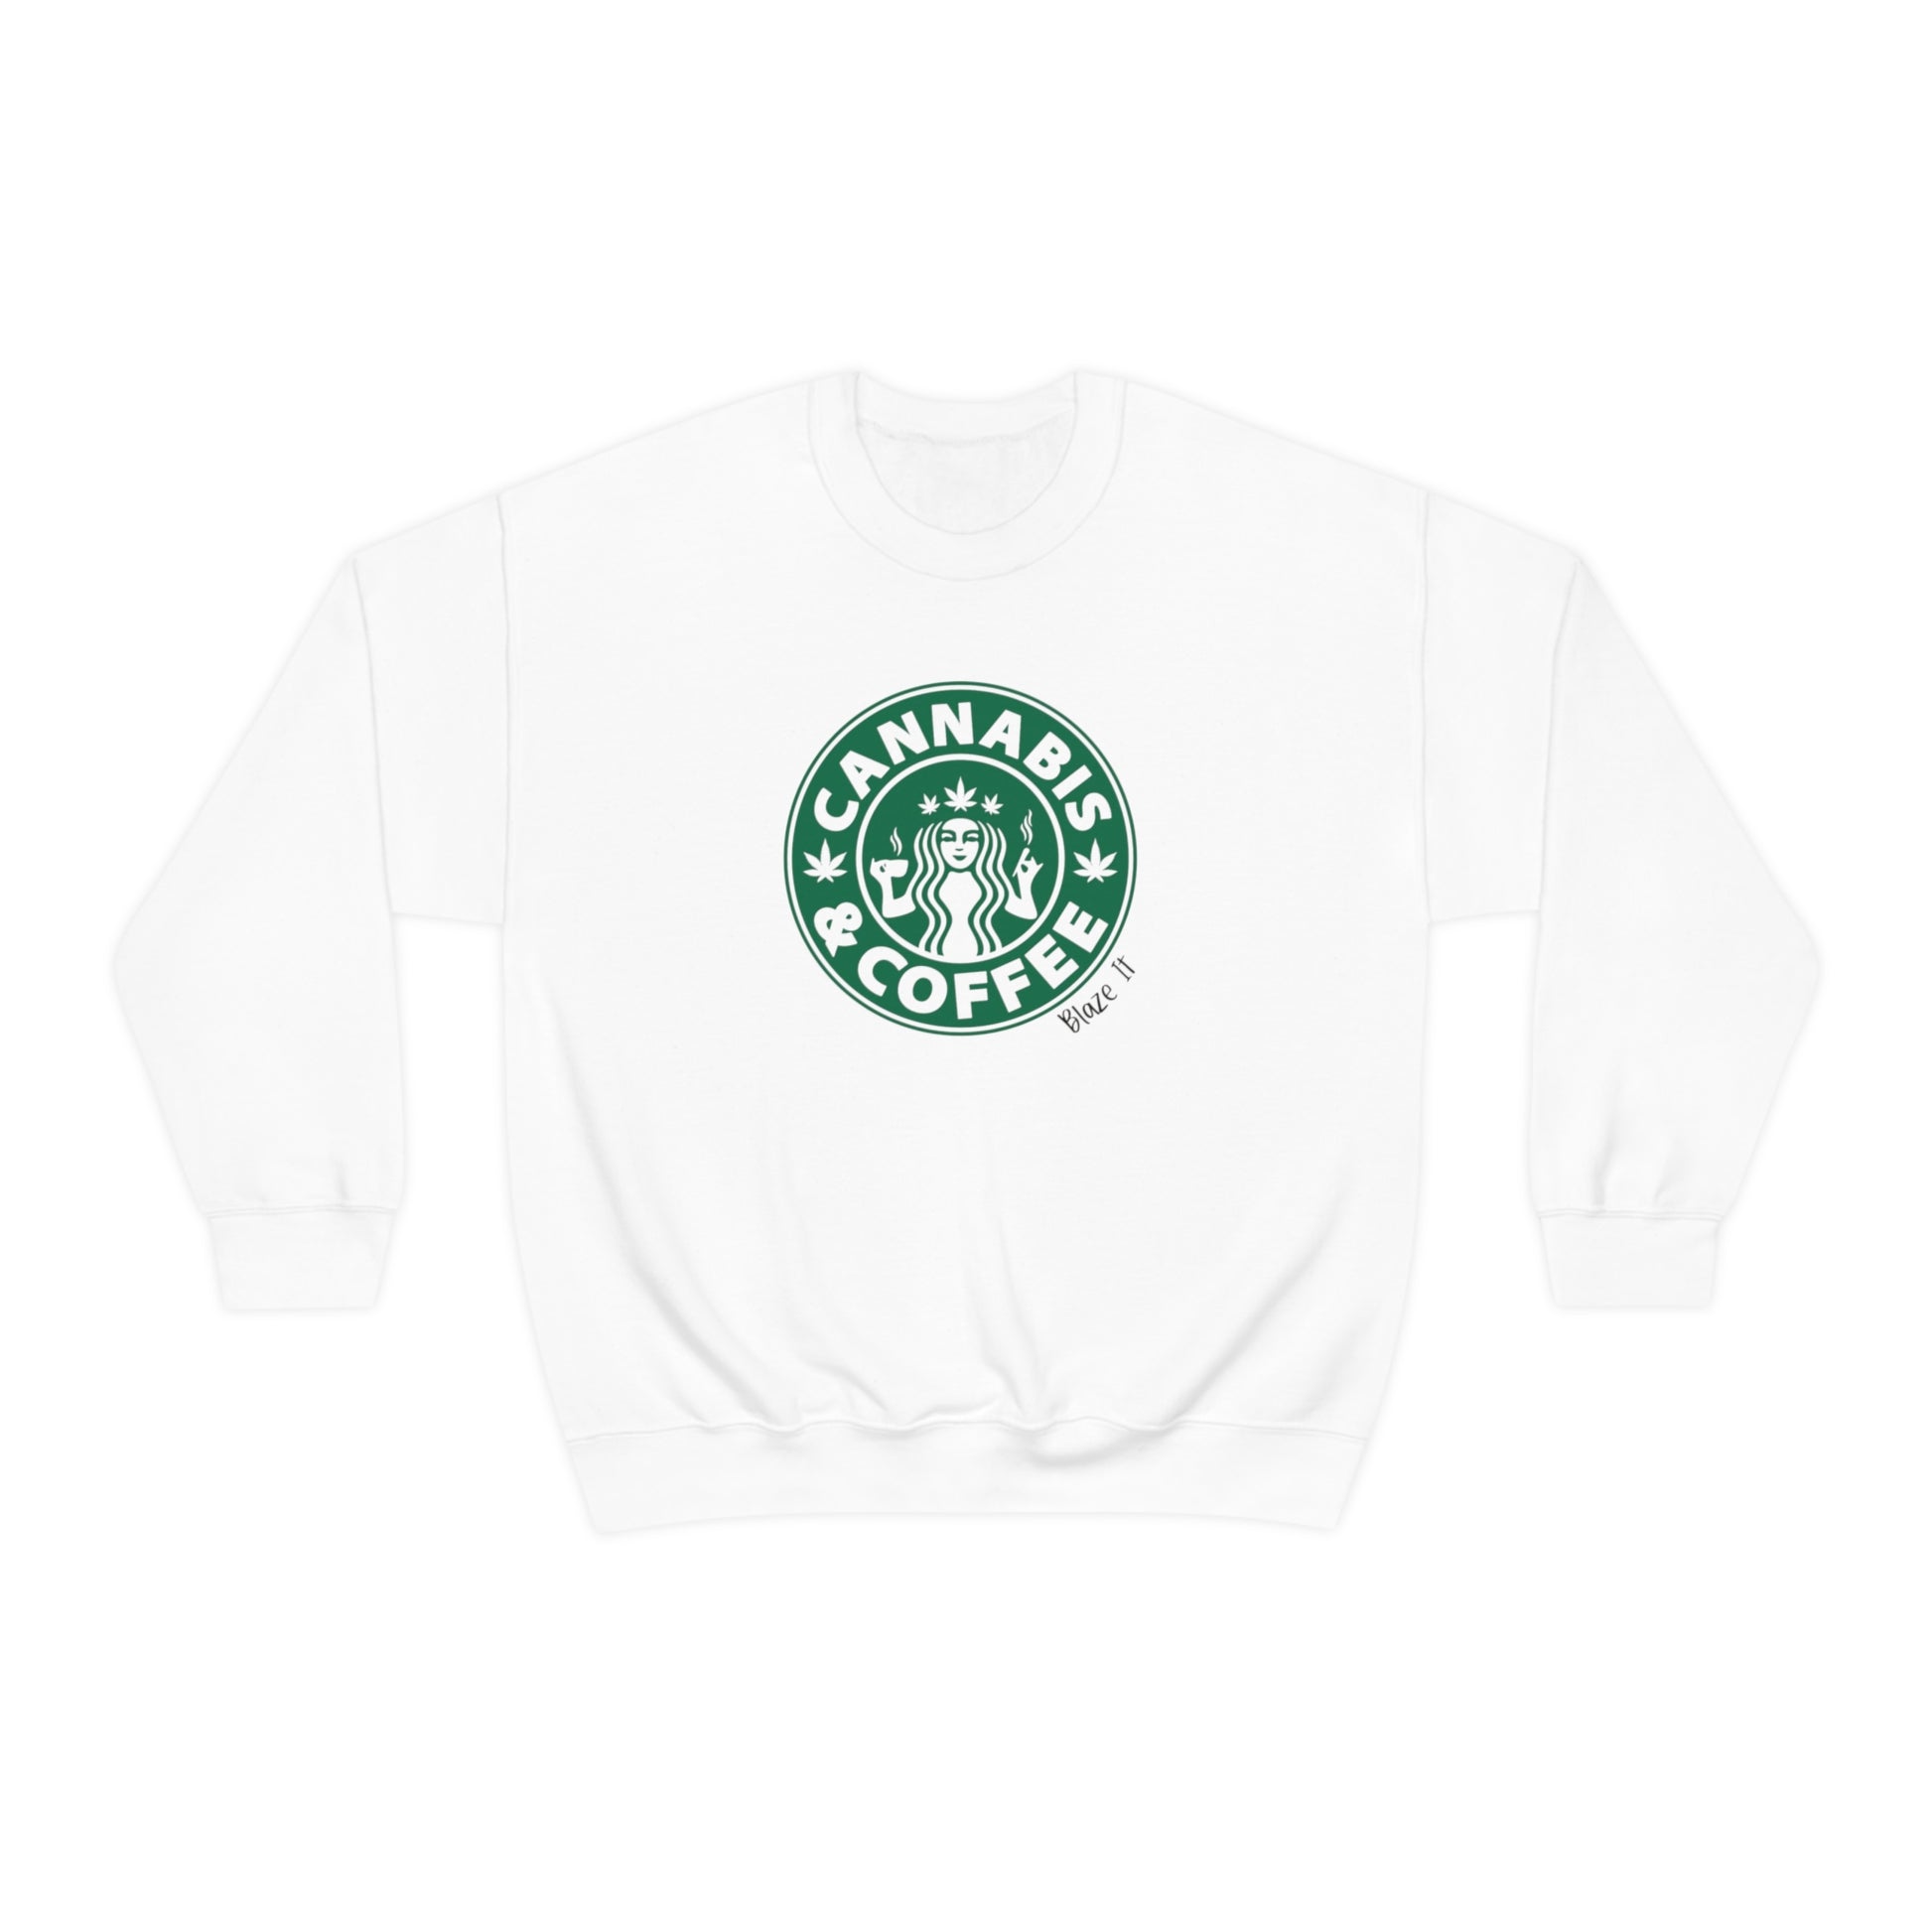 Blaze It Candle Co Cannabis and Coffee Sweatshirt - White